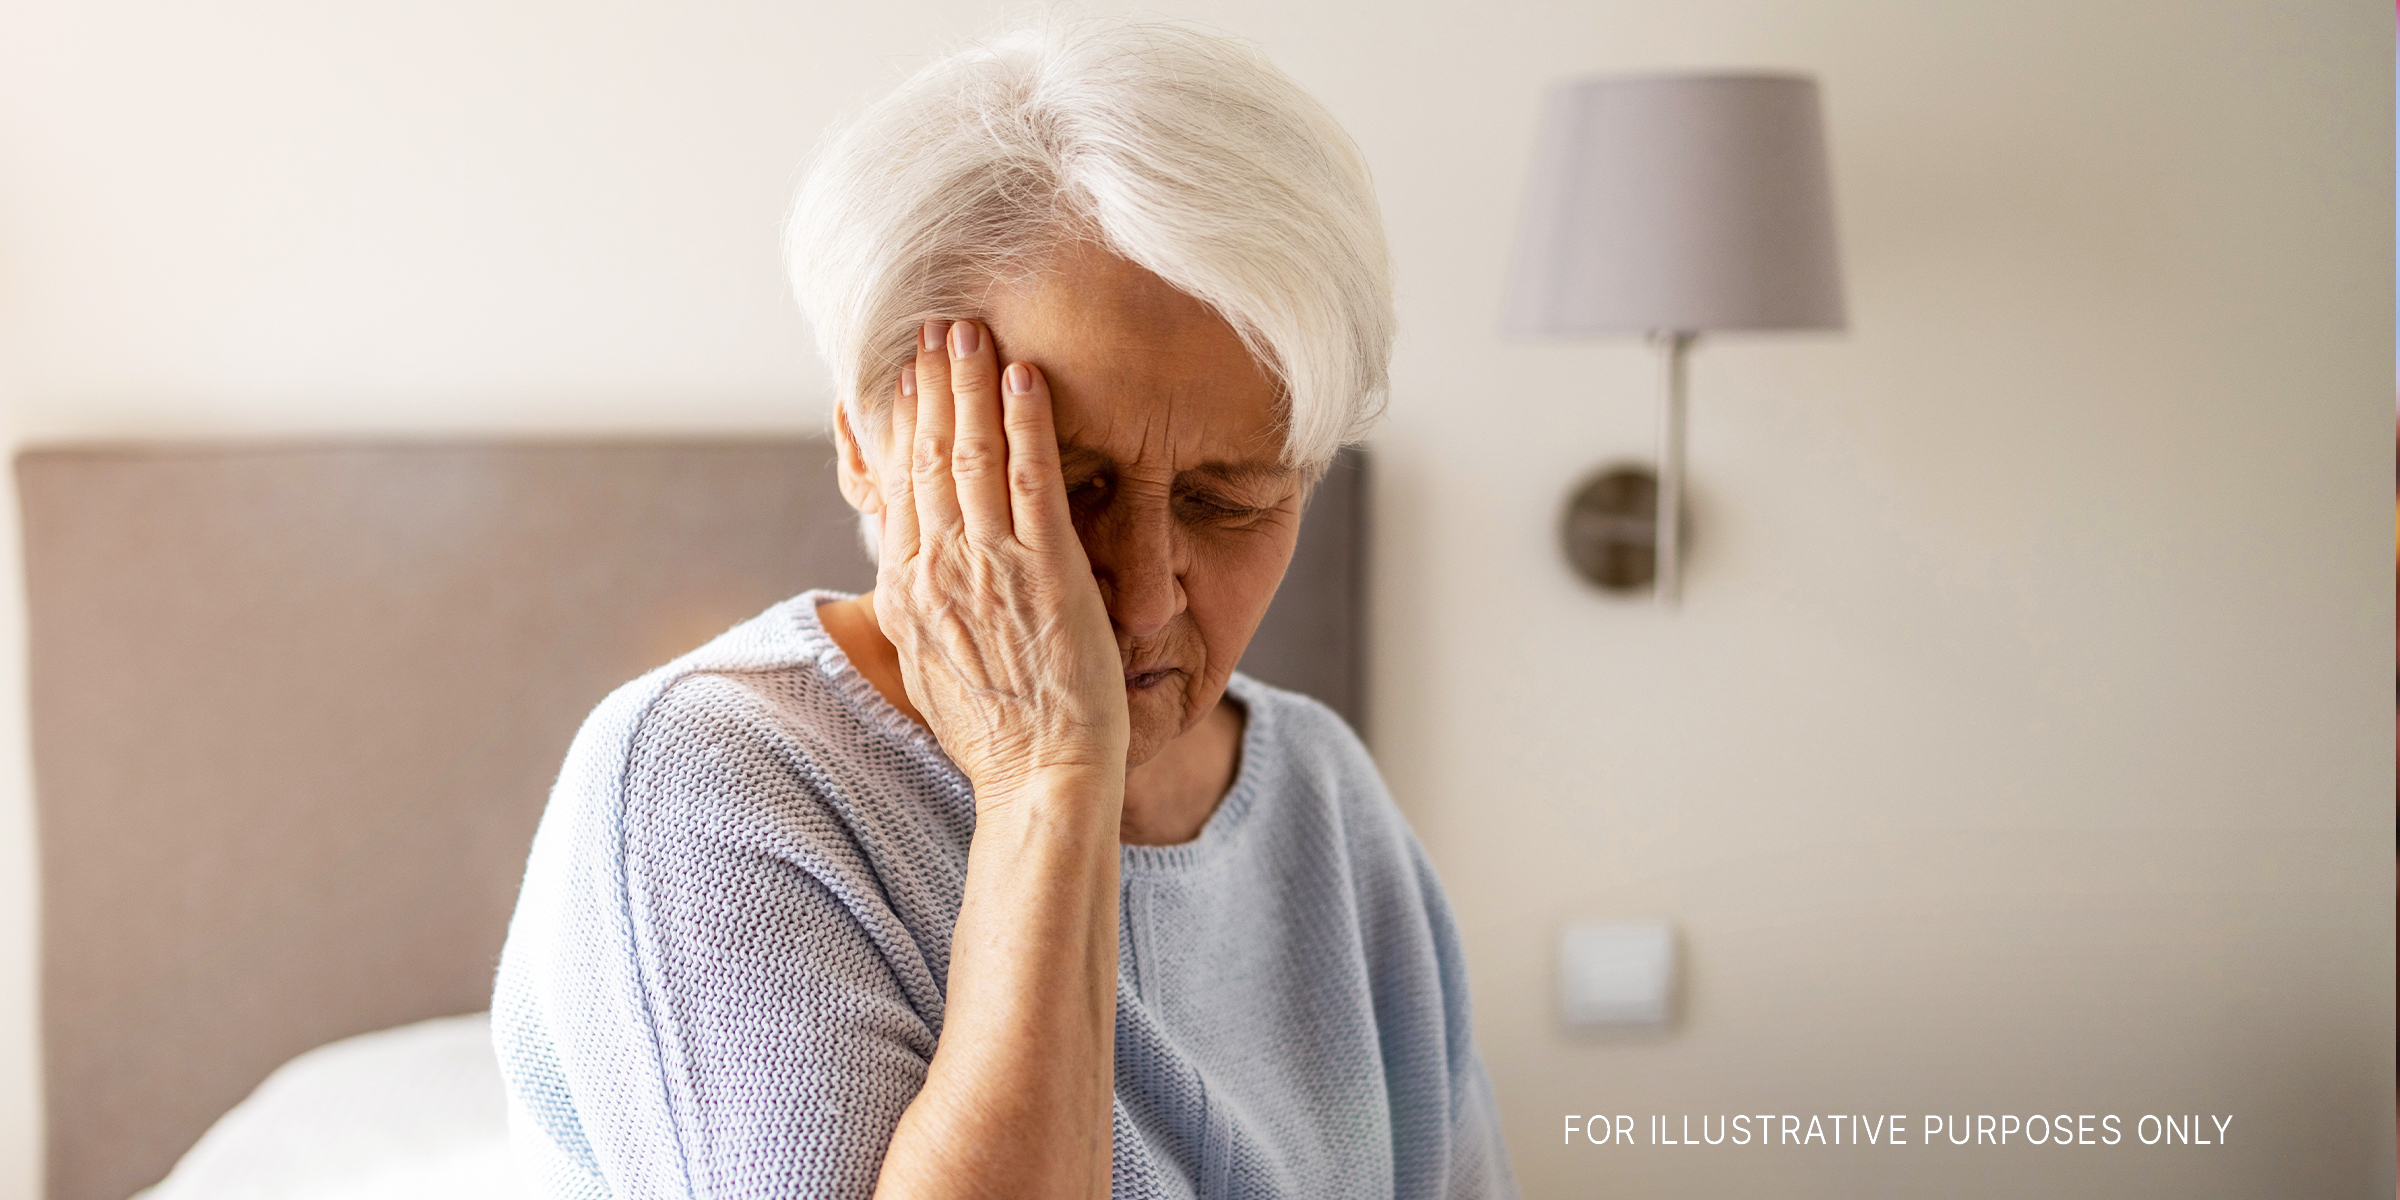 An elderly woman looking stressed | Source: Shutterstock